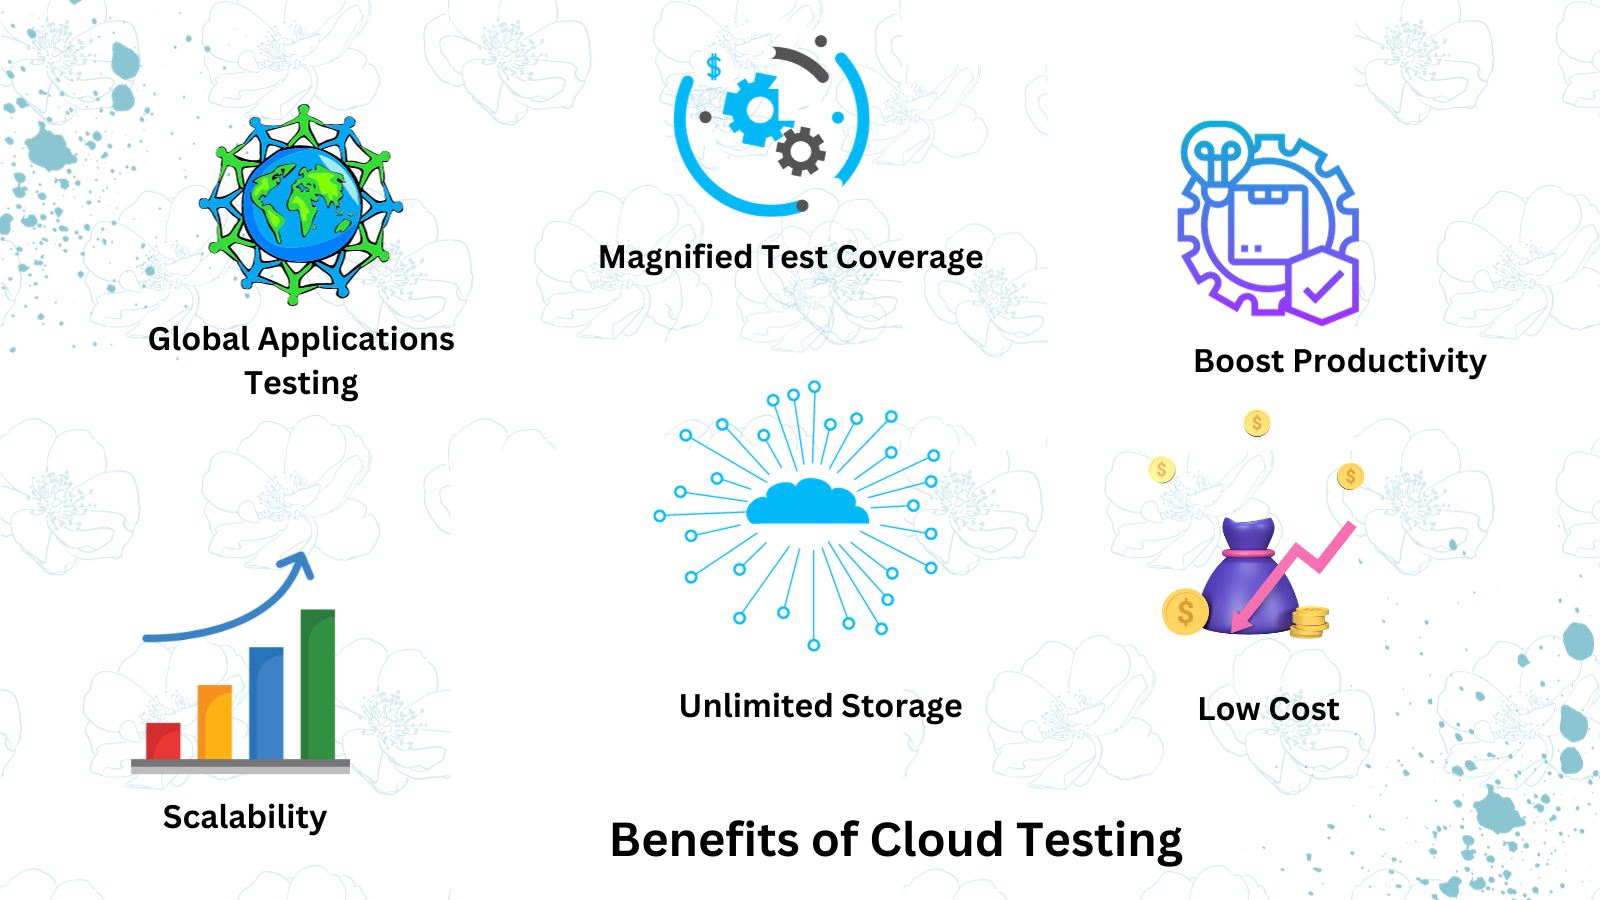 Benefits of cloud testing